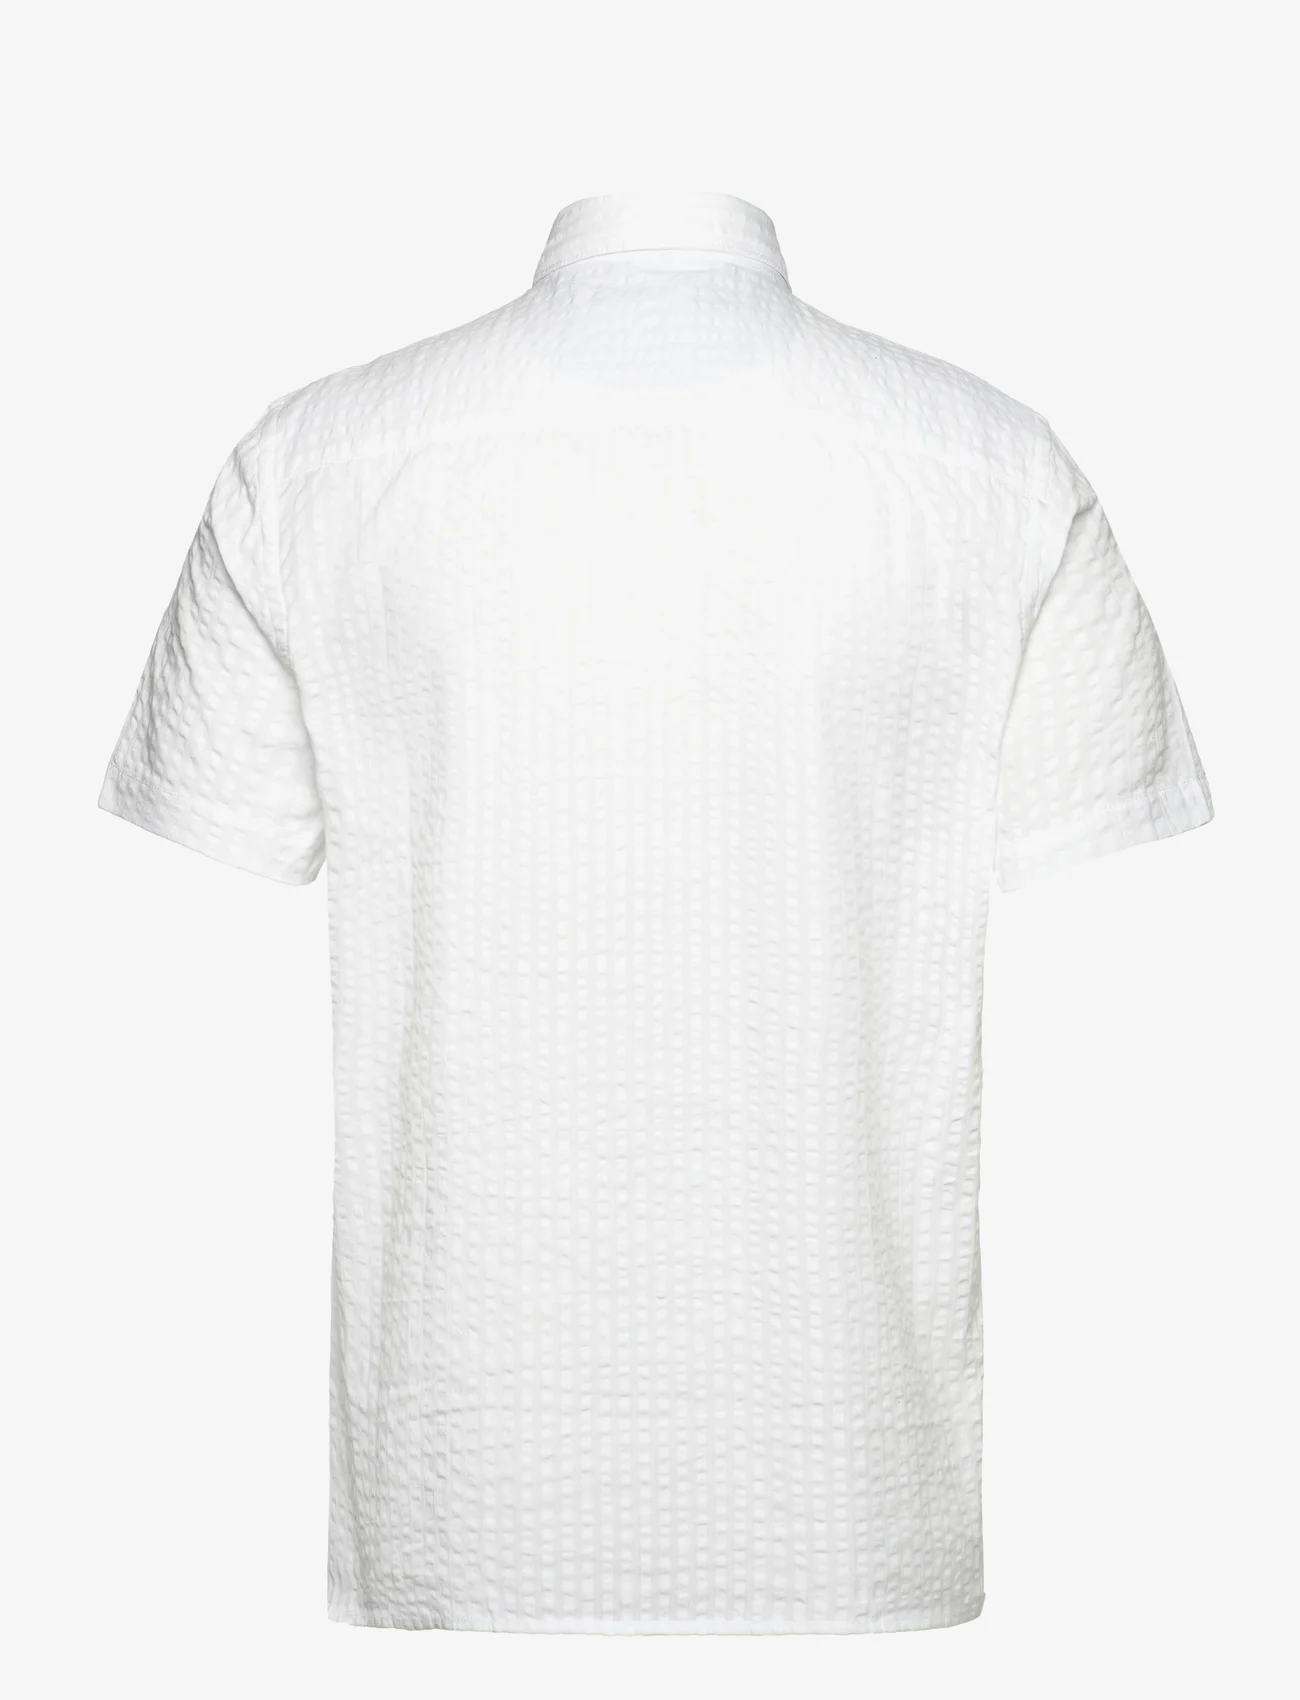 French Connection - SS SEERSUCKER CHECK SHIRT - kortærmede skjorter - white - 1